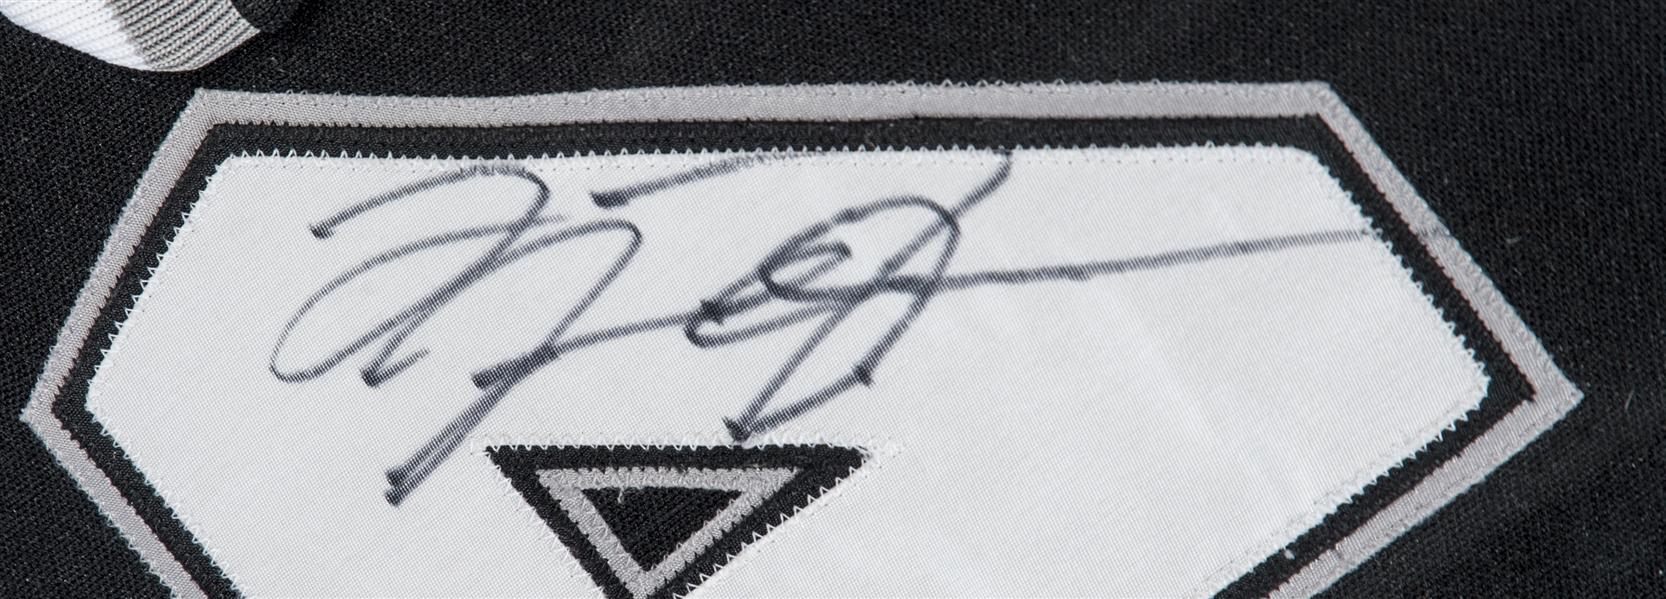 Michael Jordan Chicago White Sox Autographed White Jersey